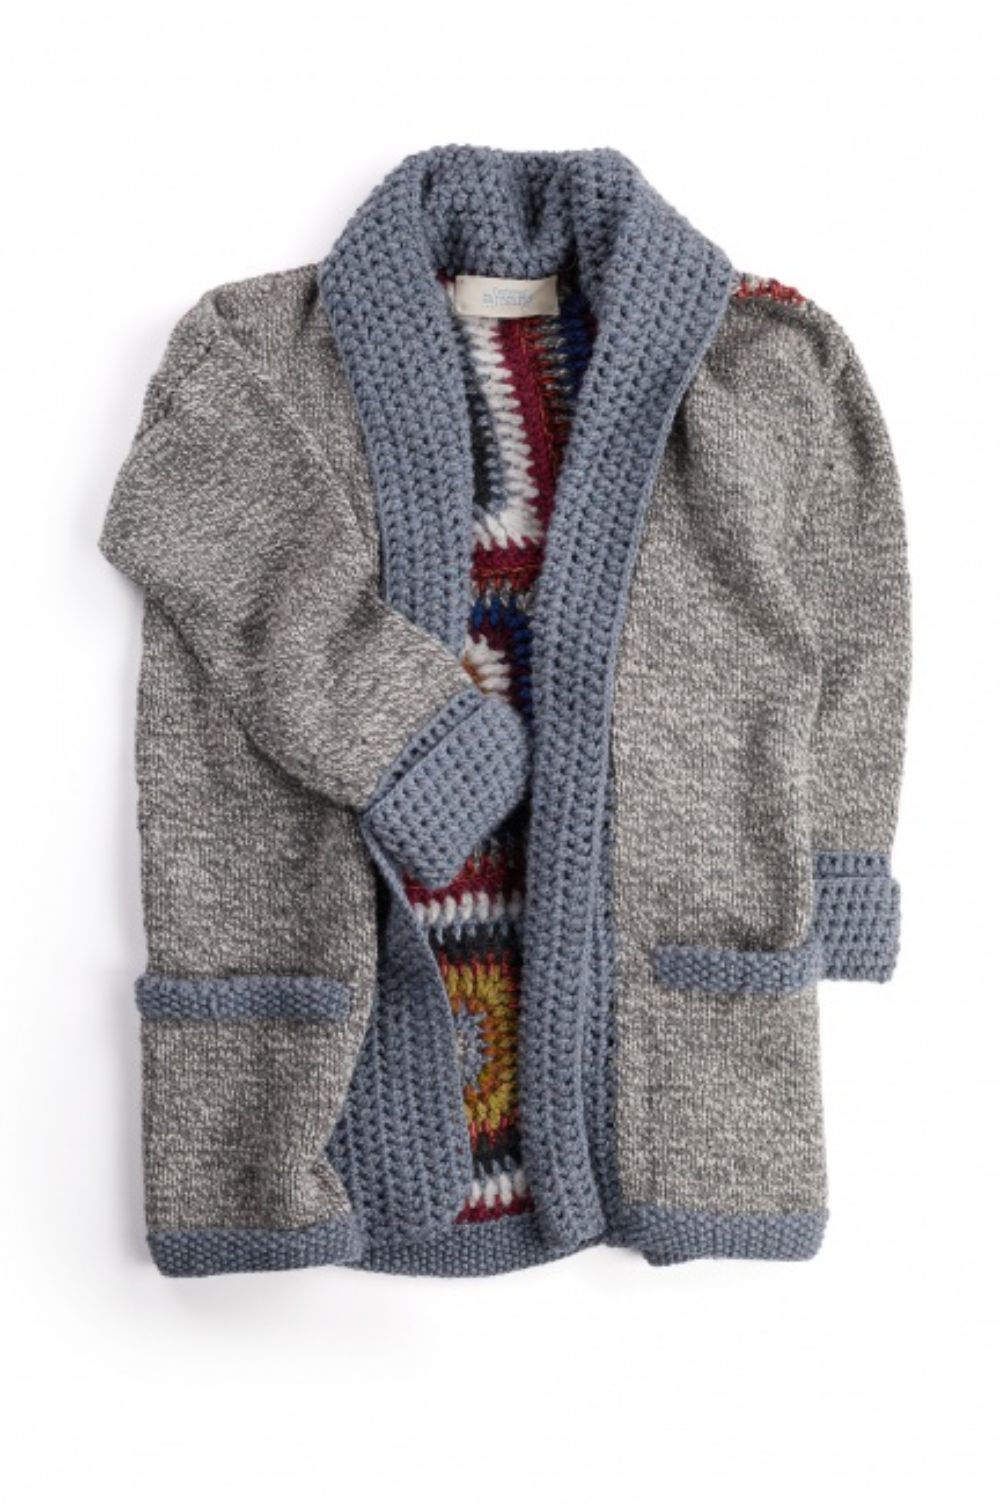 Crochet Chunky Knit Wool Cardigan Blue Grey Reversible Two Tone